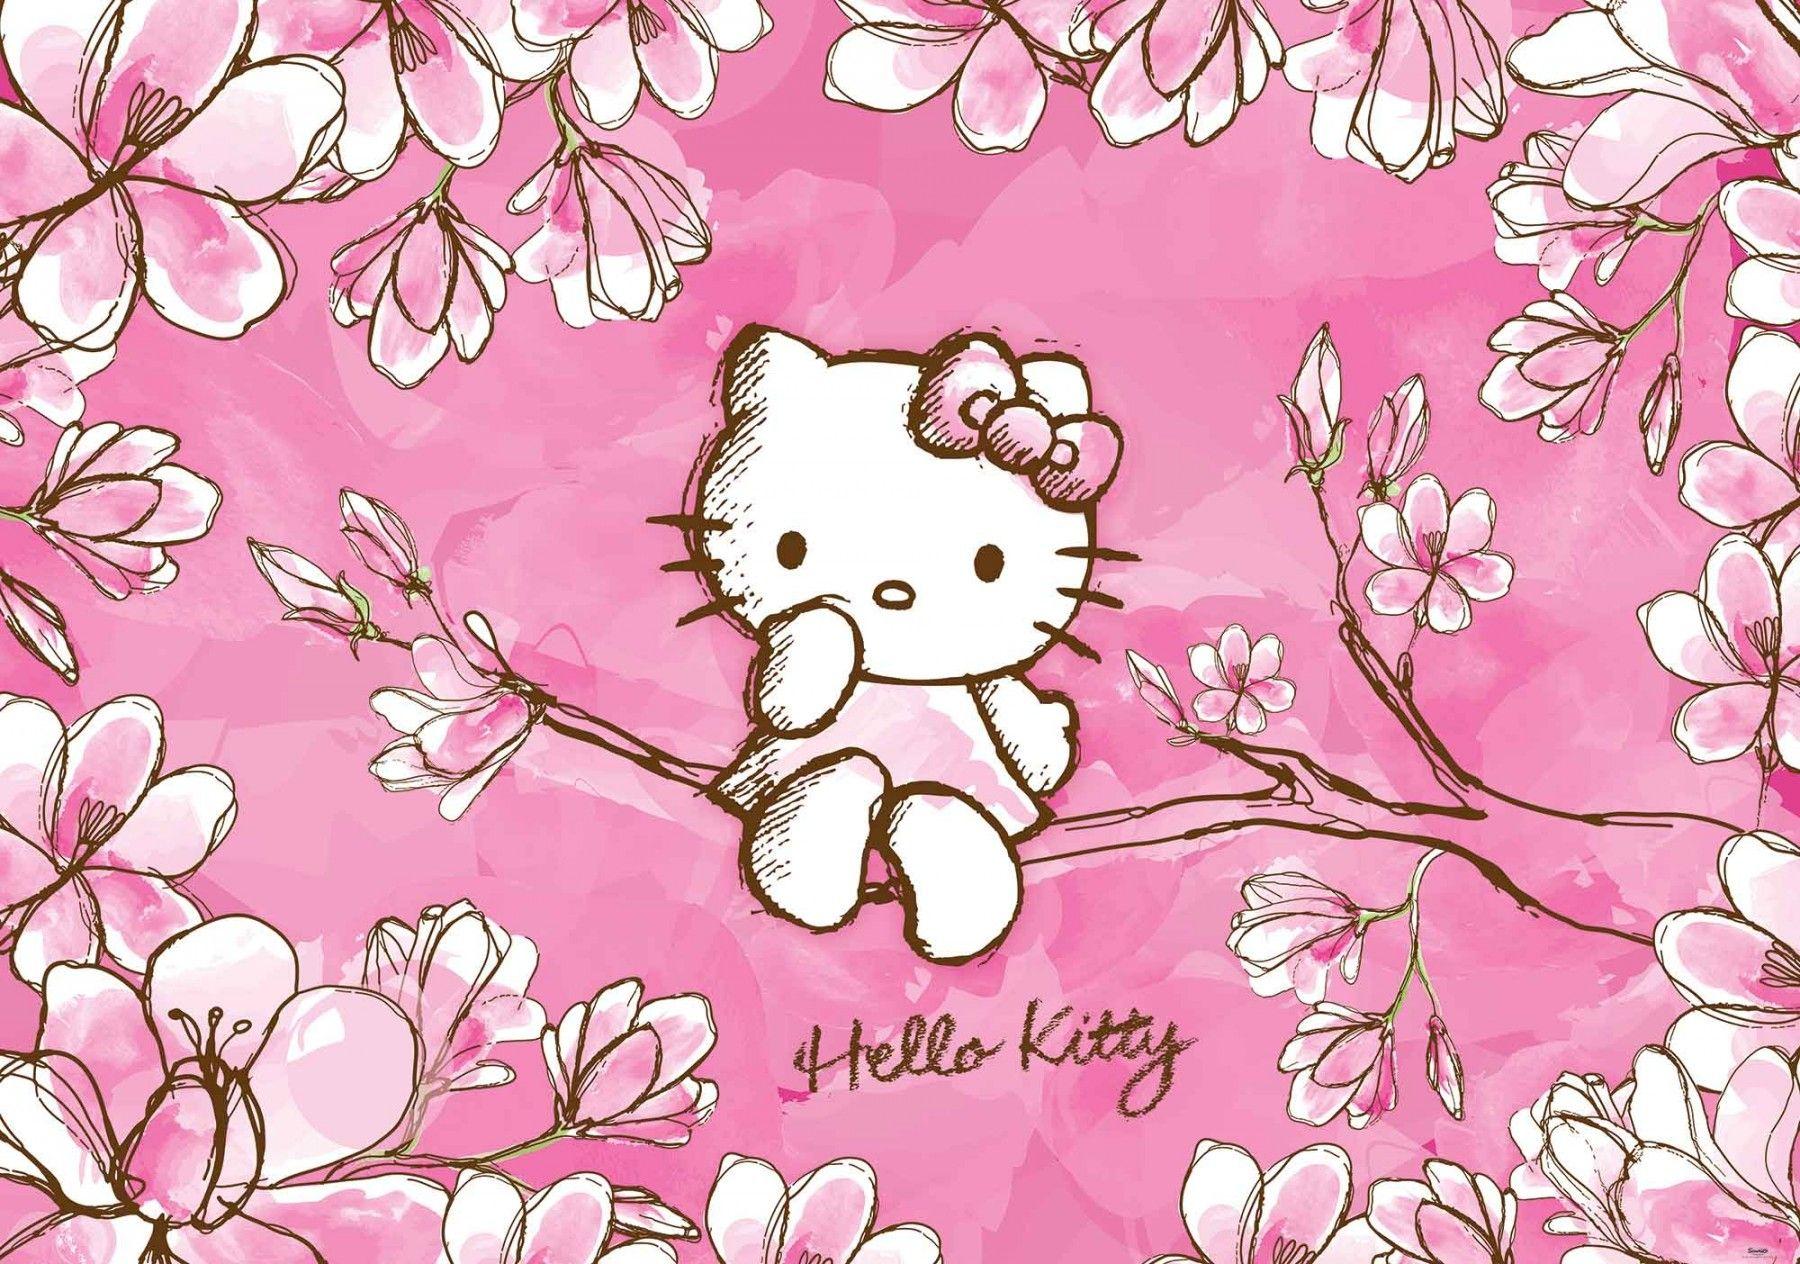 Заставка hello. Хелло Китти. Х̆̈ӗ̈л̆̈л̆̈о̆̈ў̈ К̆̈Й̈Т̆̈Й̈. Фотообои с Хеллоу Китти. Хэллоу Китти розовая.